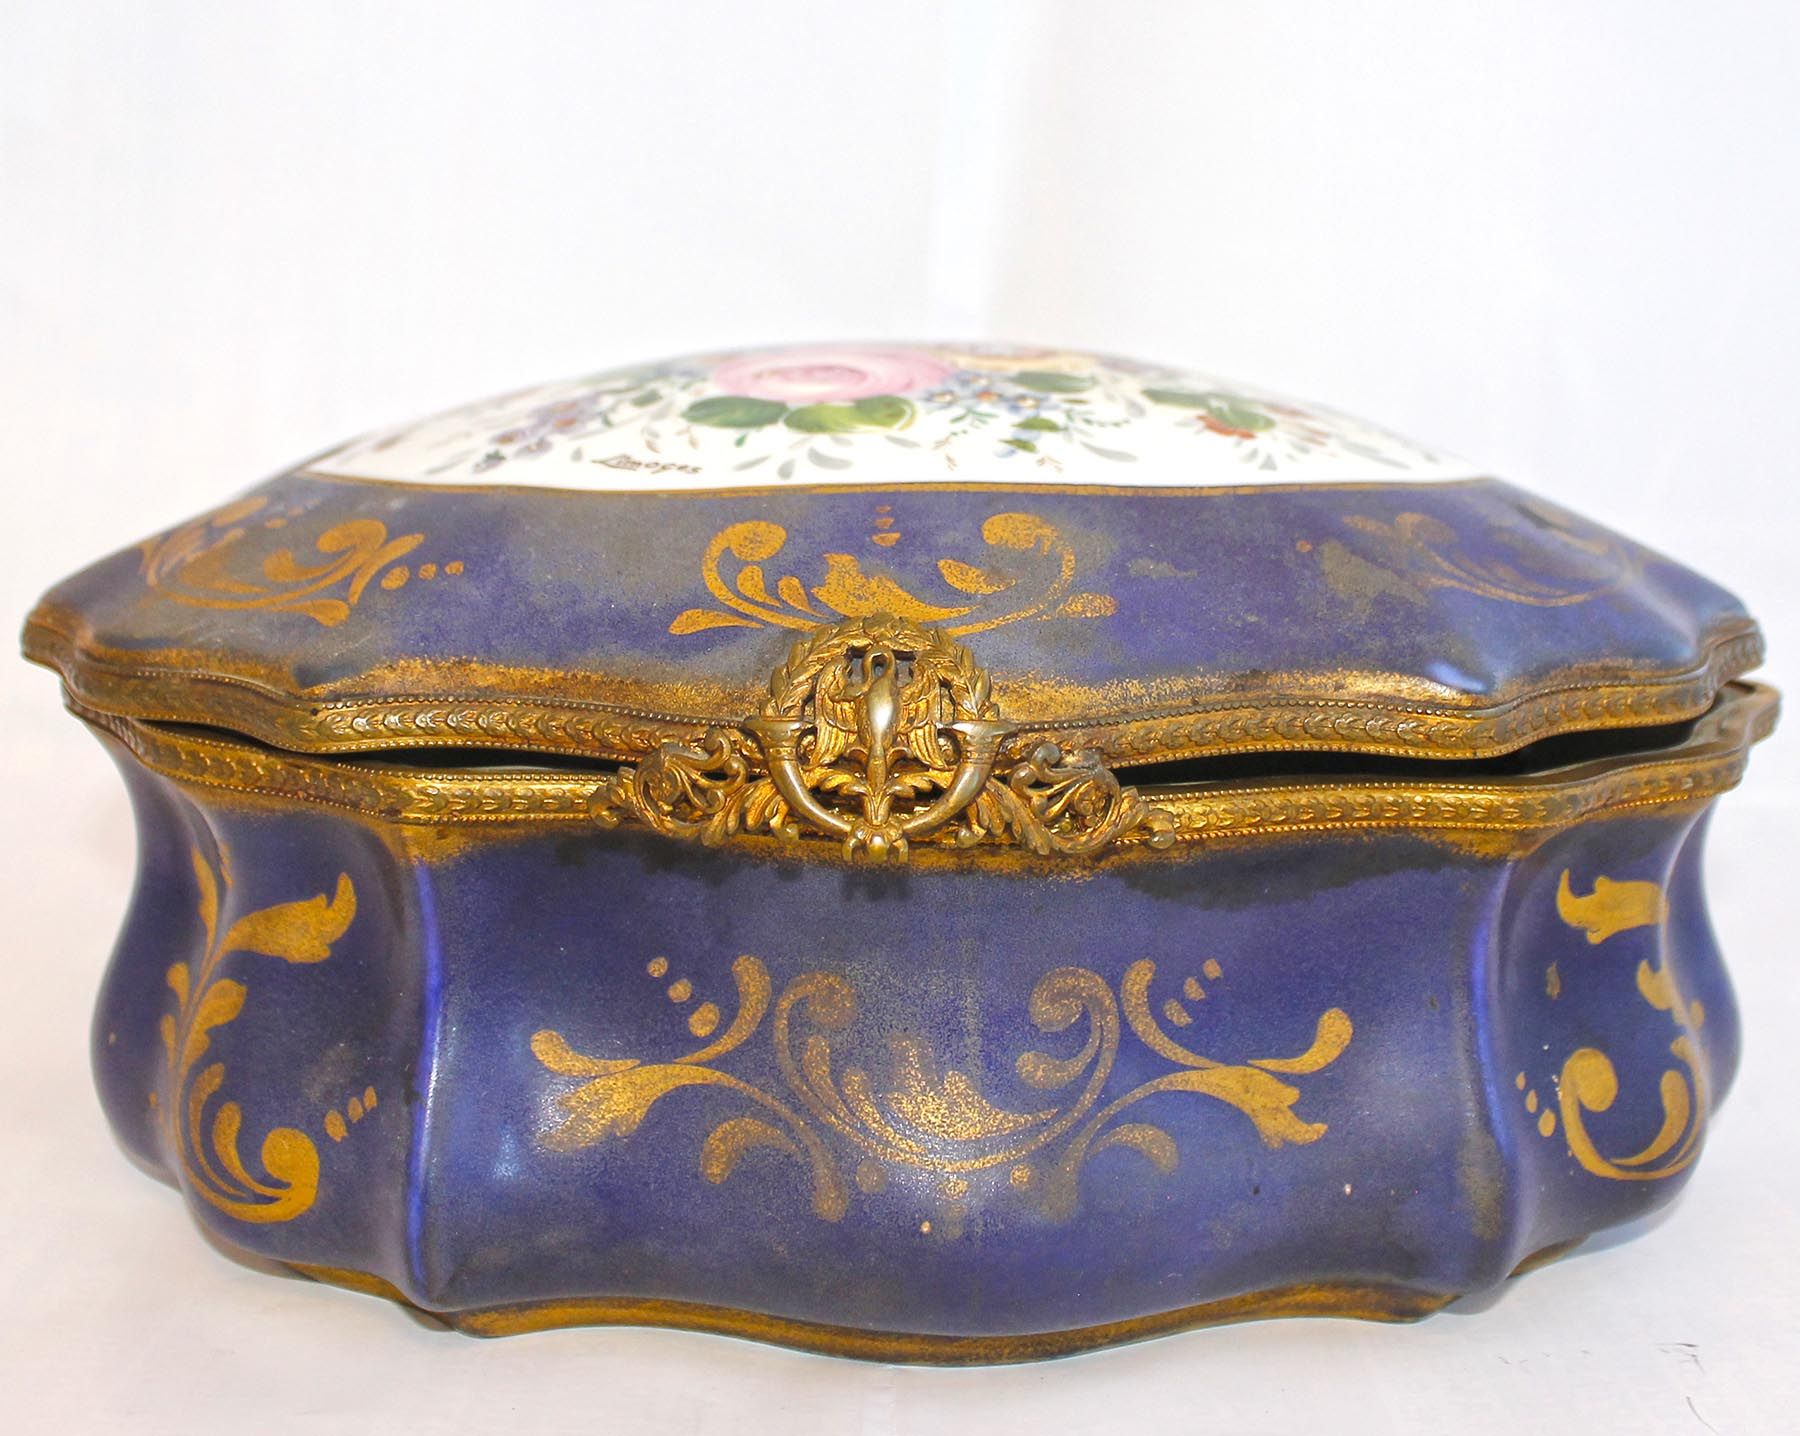 Null 利摩日珠宝盒


法国制造，20世纪上半叶


手绘多色瓷盒，中央保留区的花卉图案，镀金亮点


13x25x19厘米